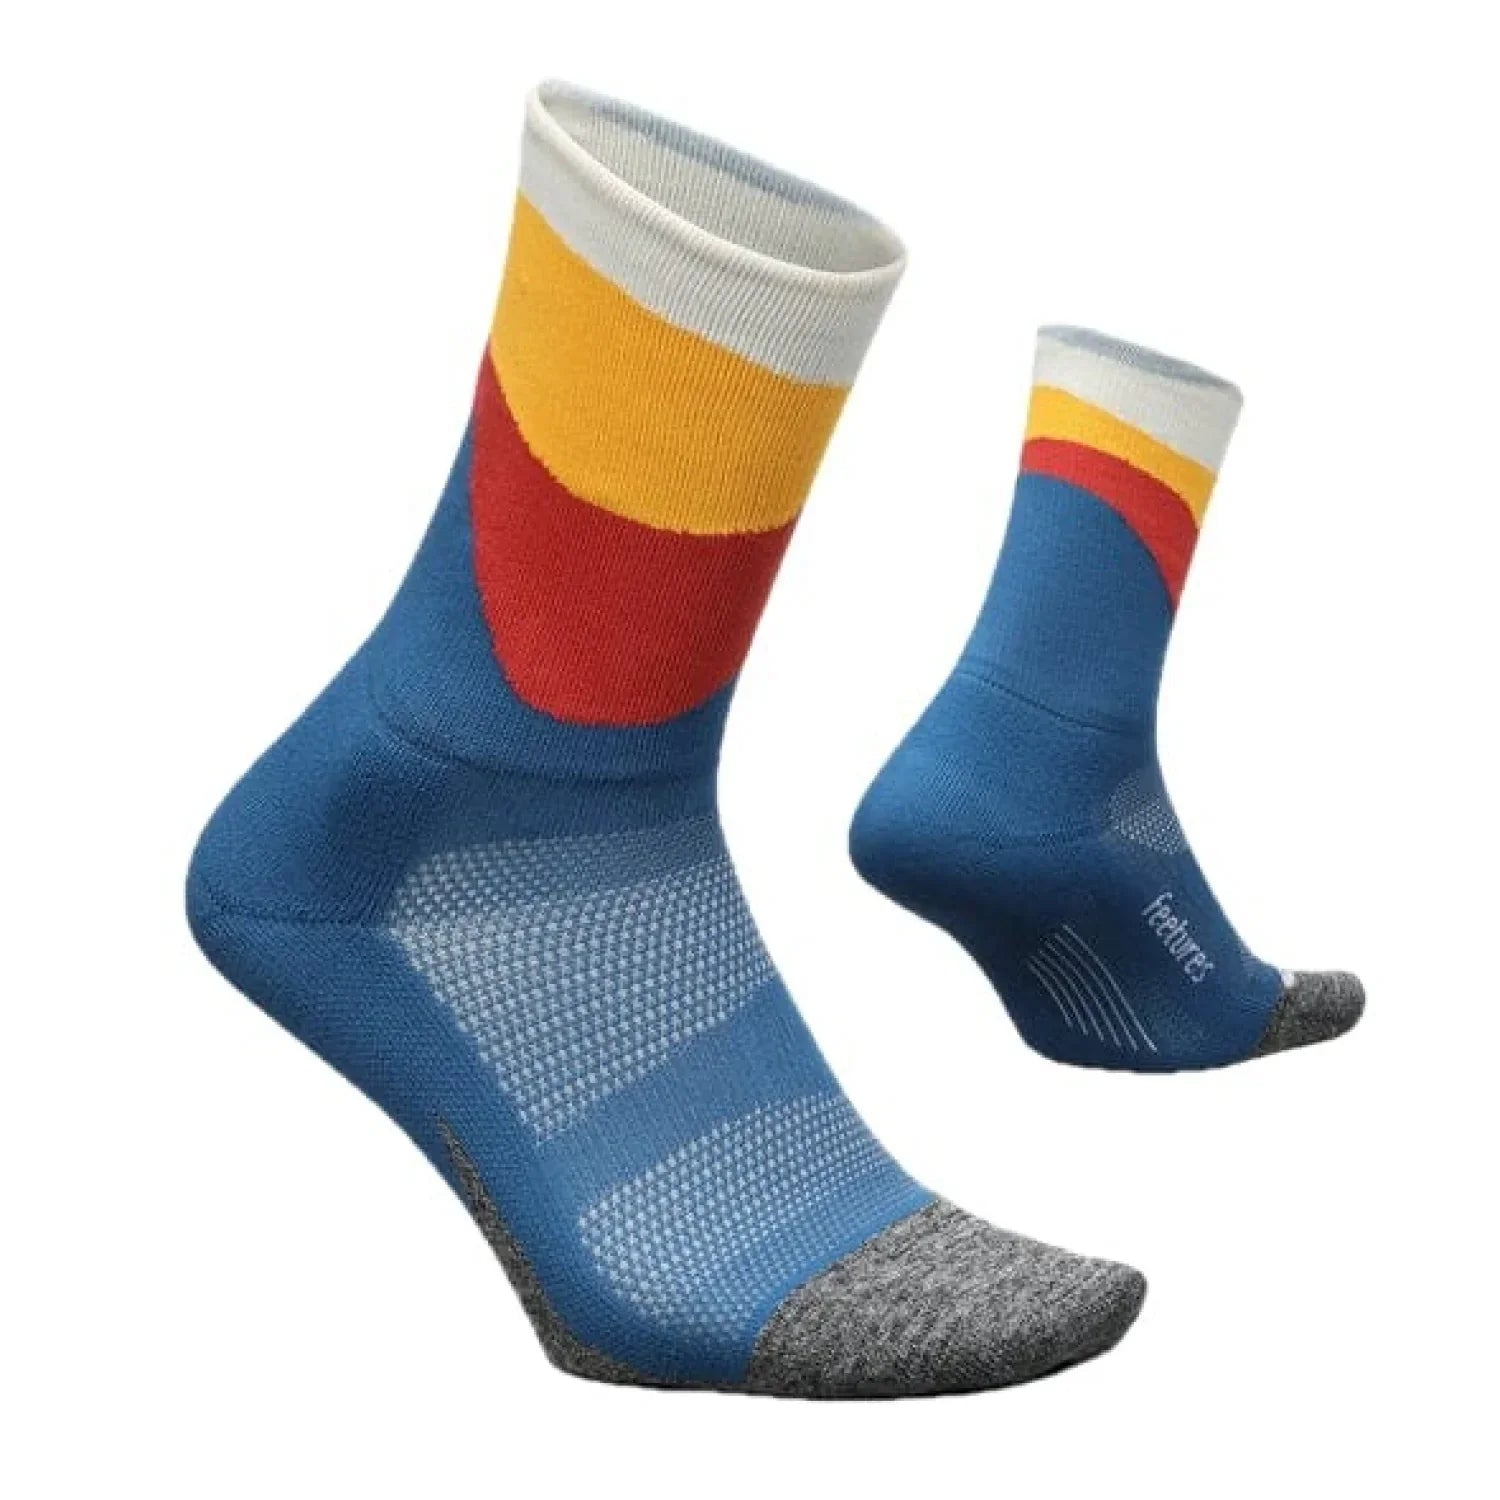 Feetures 19. SOCKS Elite Light Cushion Mini Crew Socks RETROGRADE BLUE